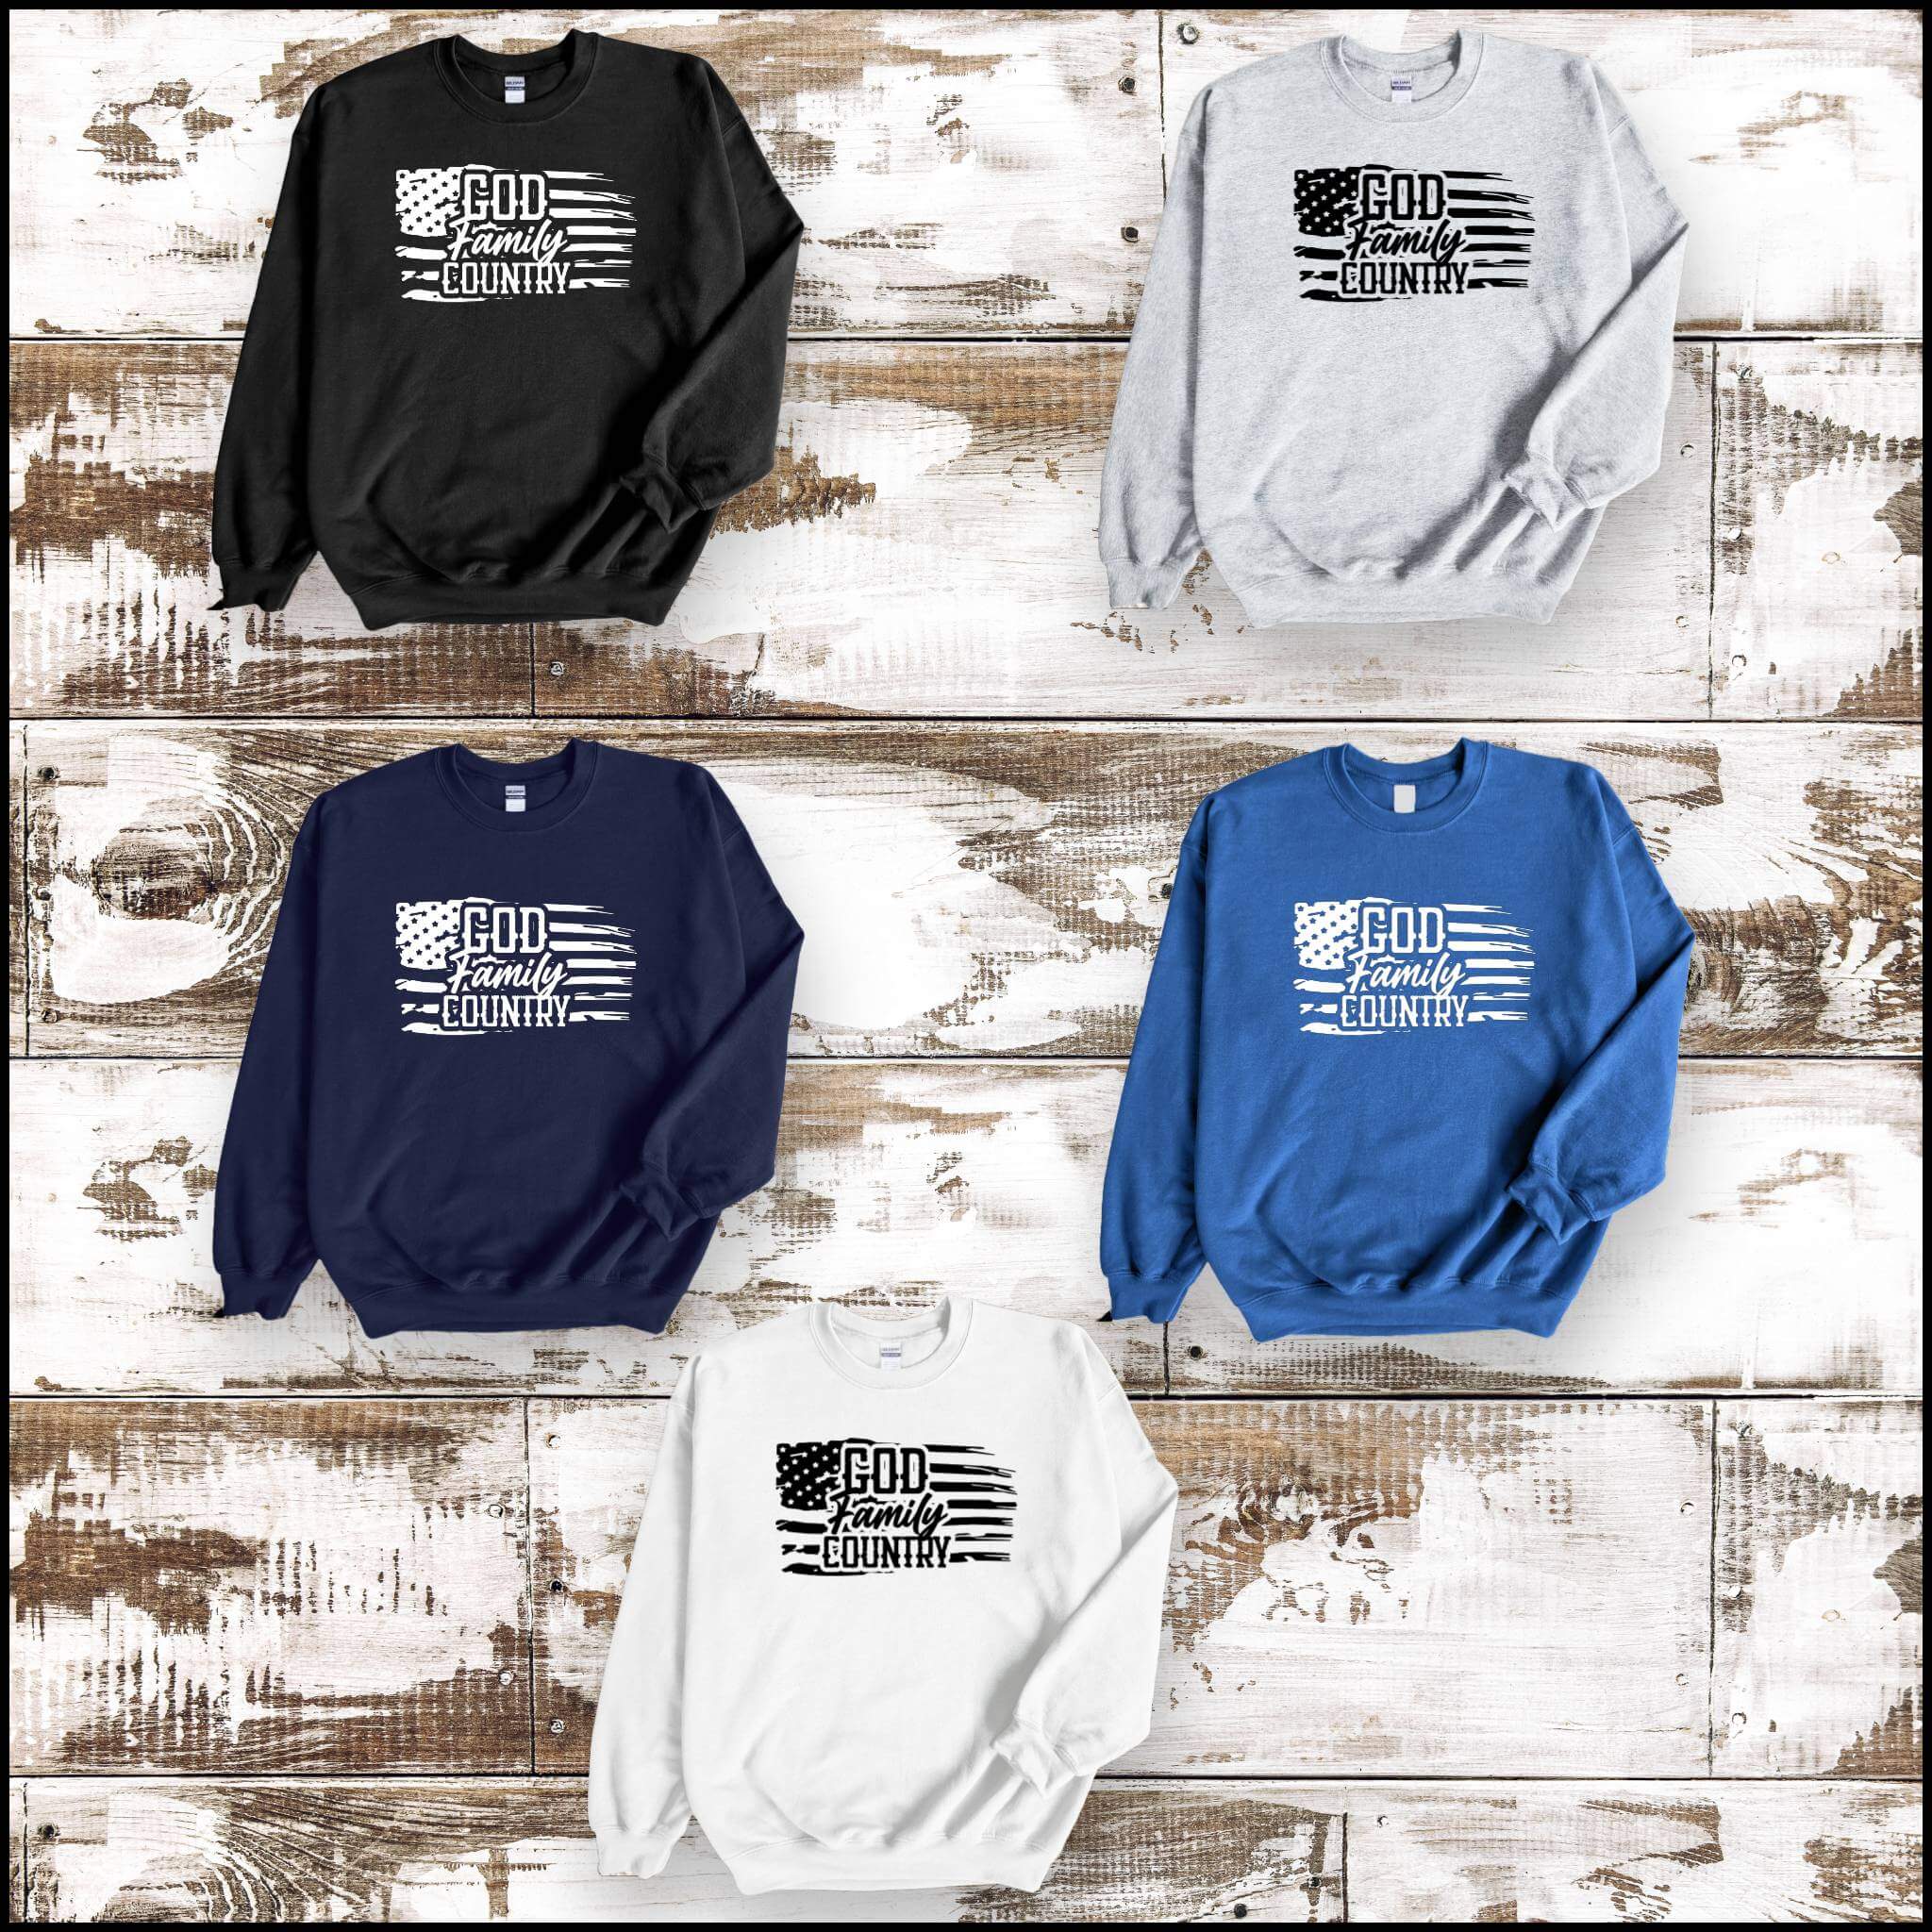 America - God Family Country Unisex Graphic Print T-Shirt / Sweatshirt